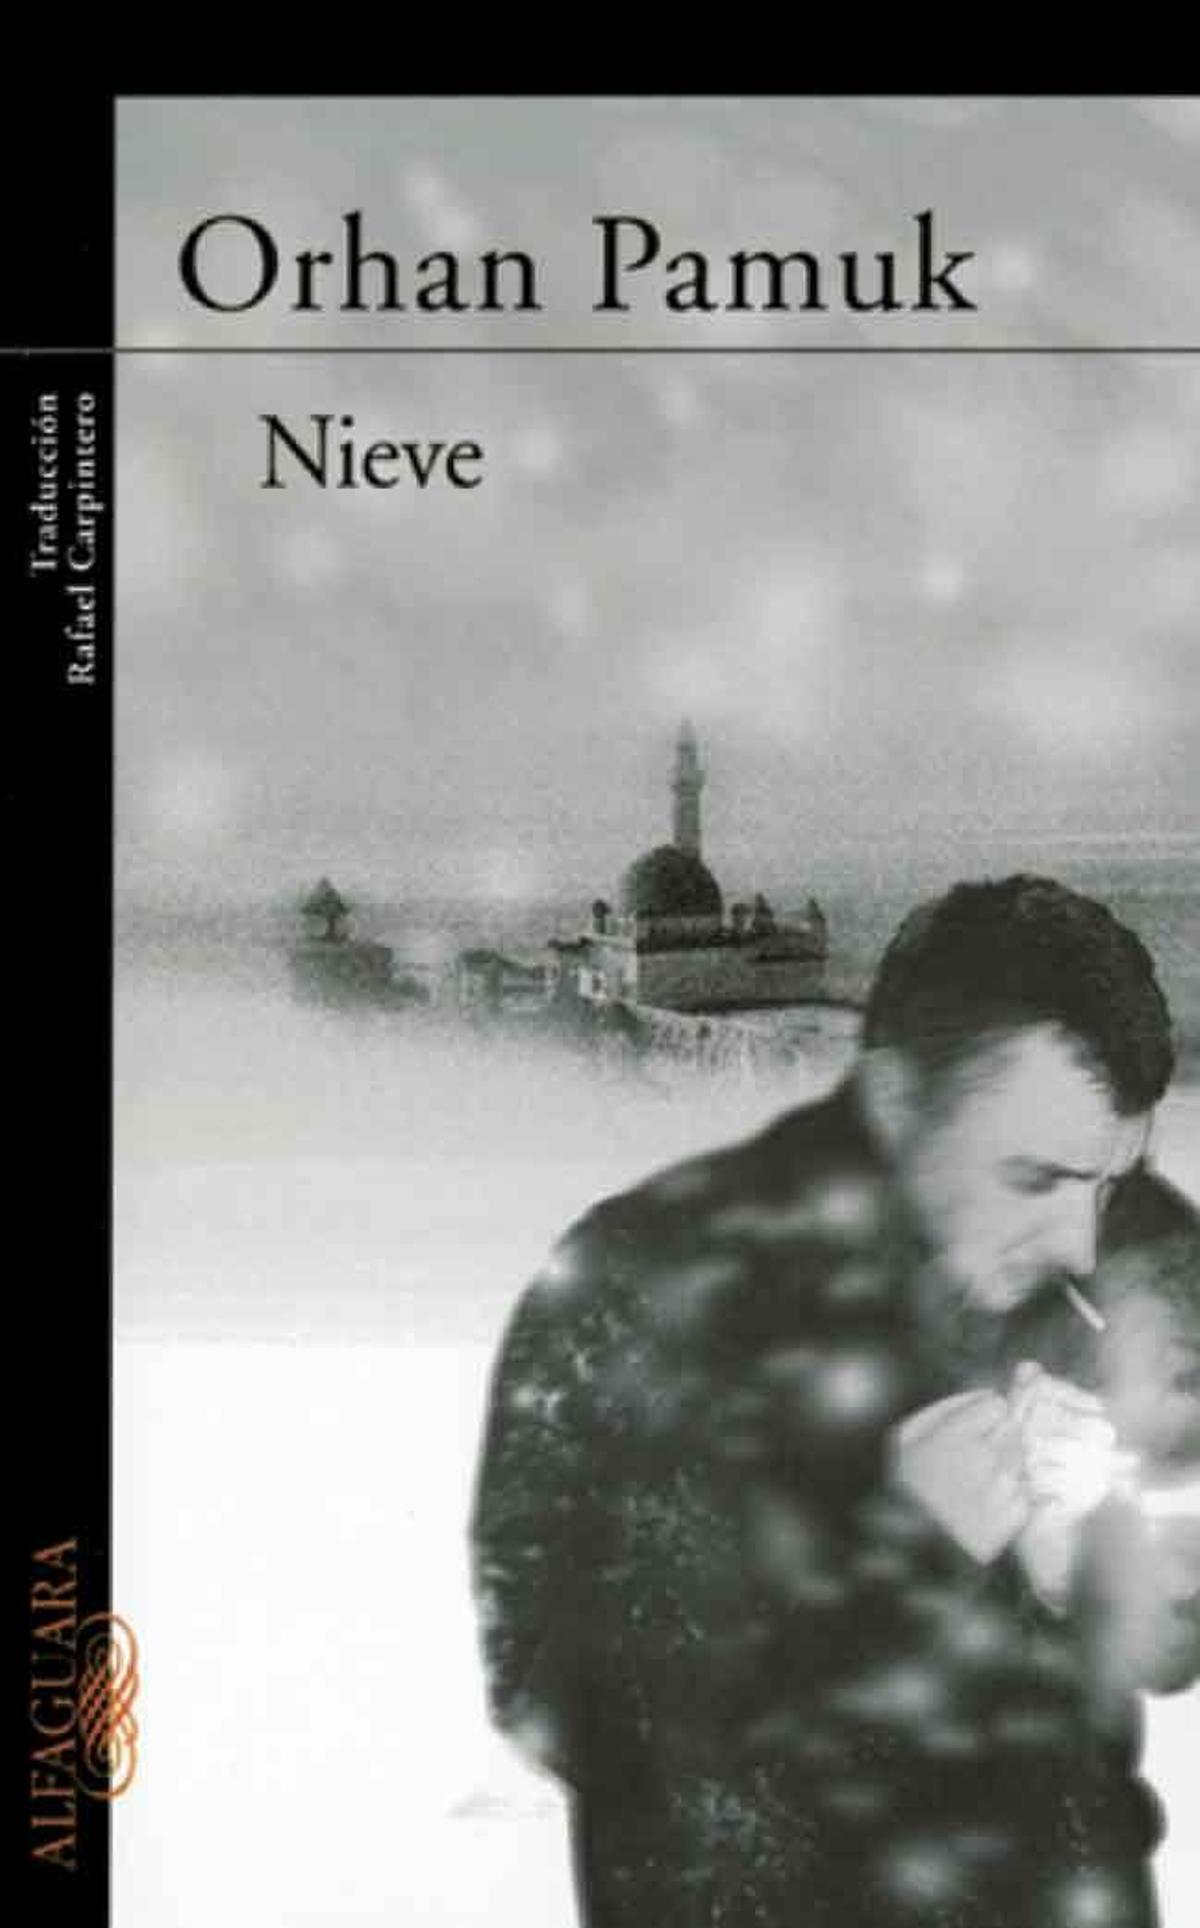 La novela 'Nieve' de Orhan Pamuk